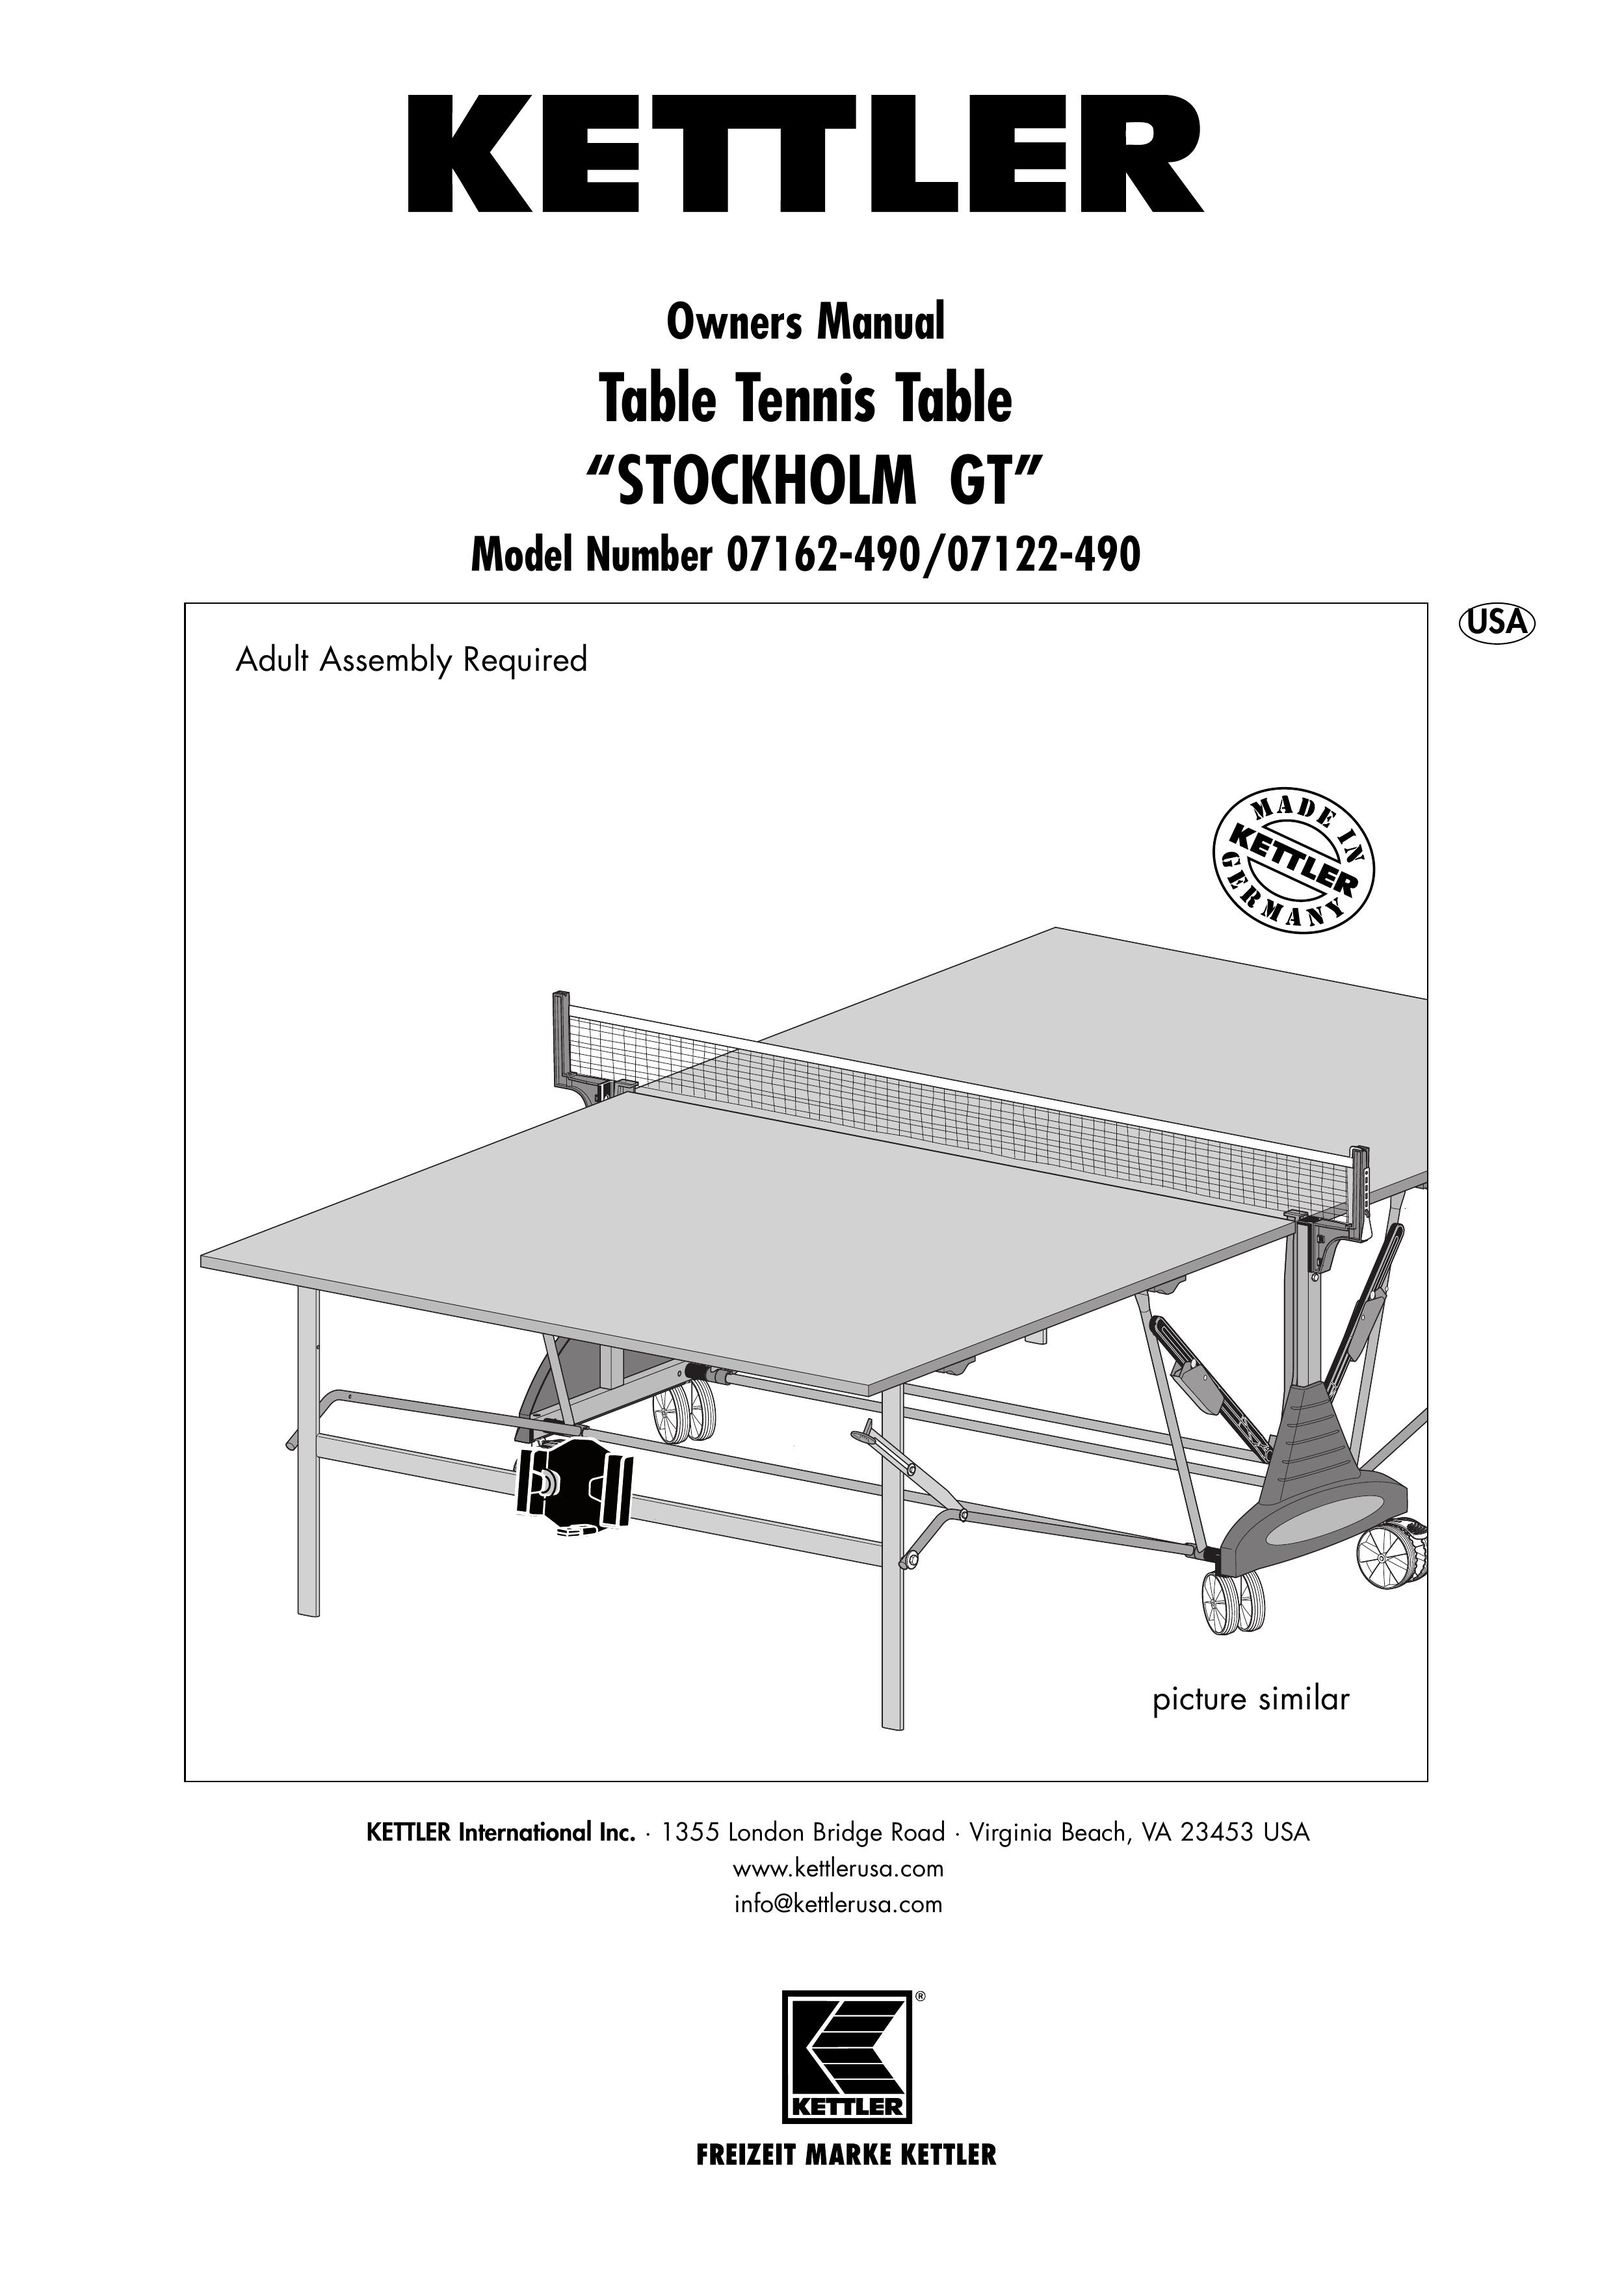 Kettler 07122-490 Table Top Game User Manual